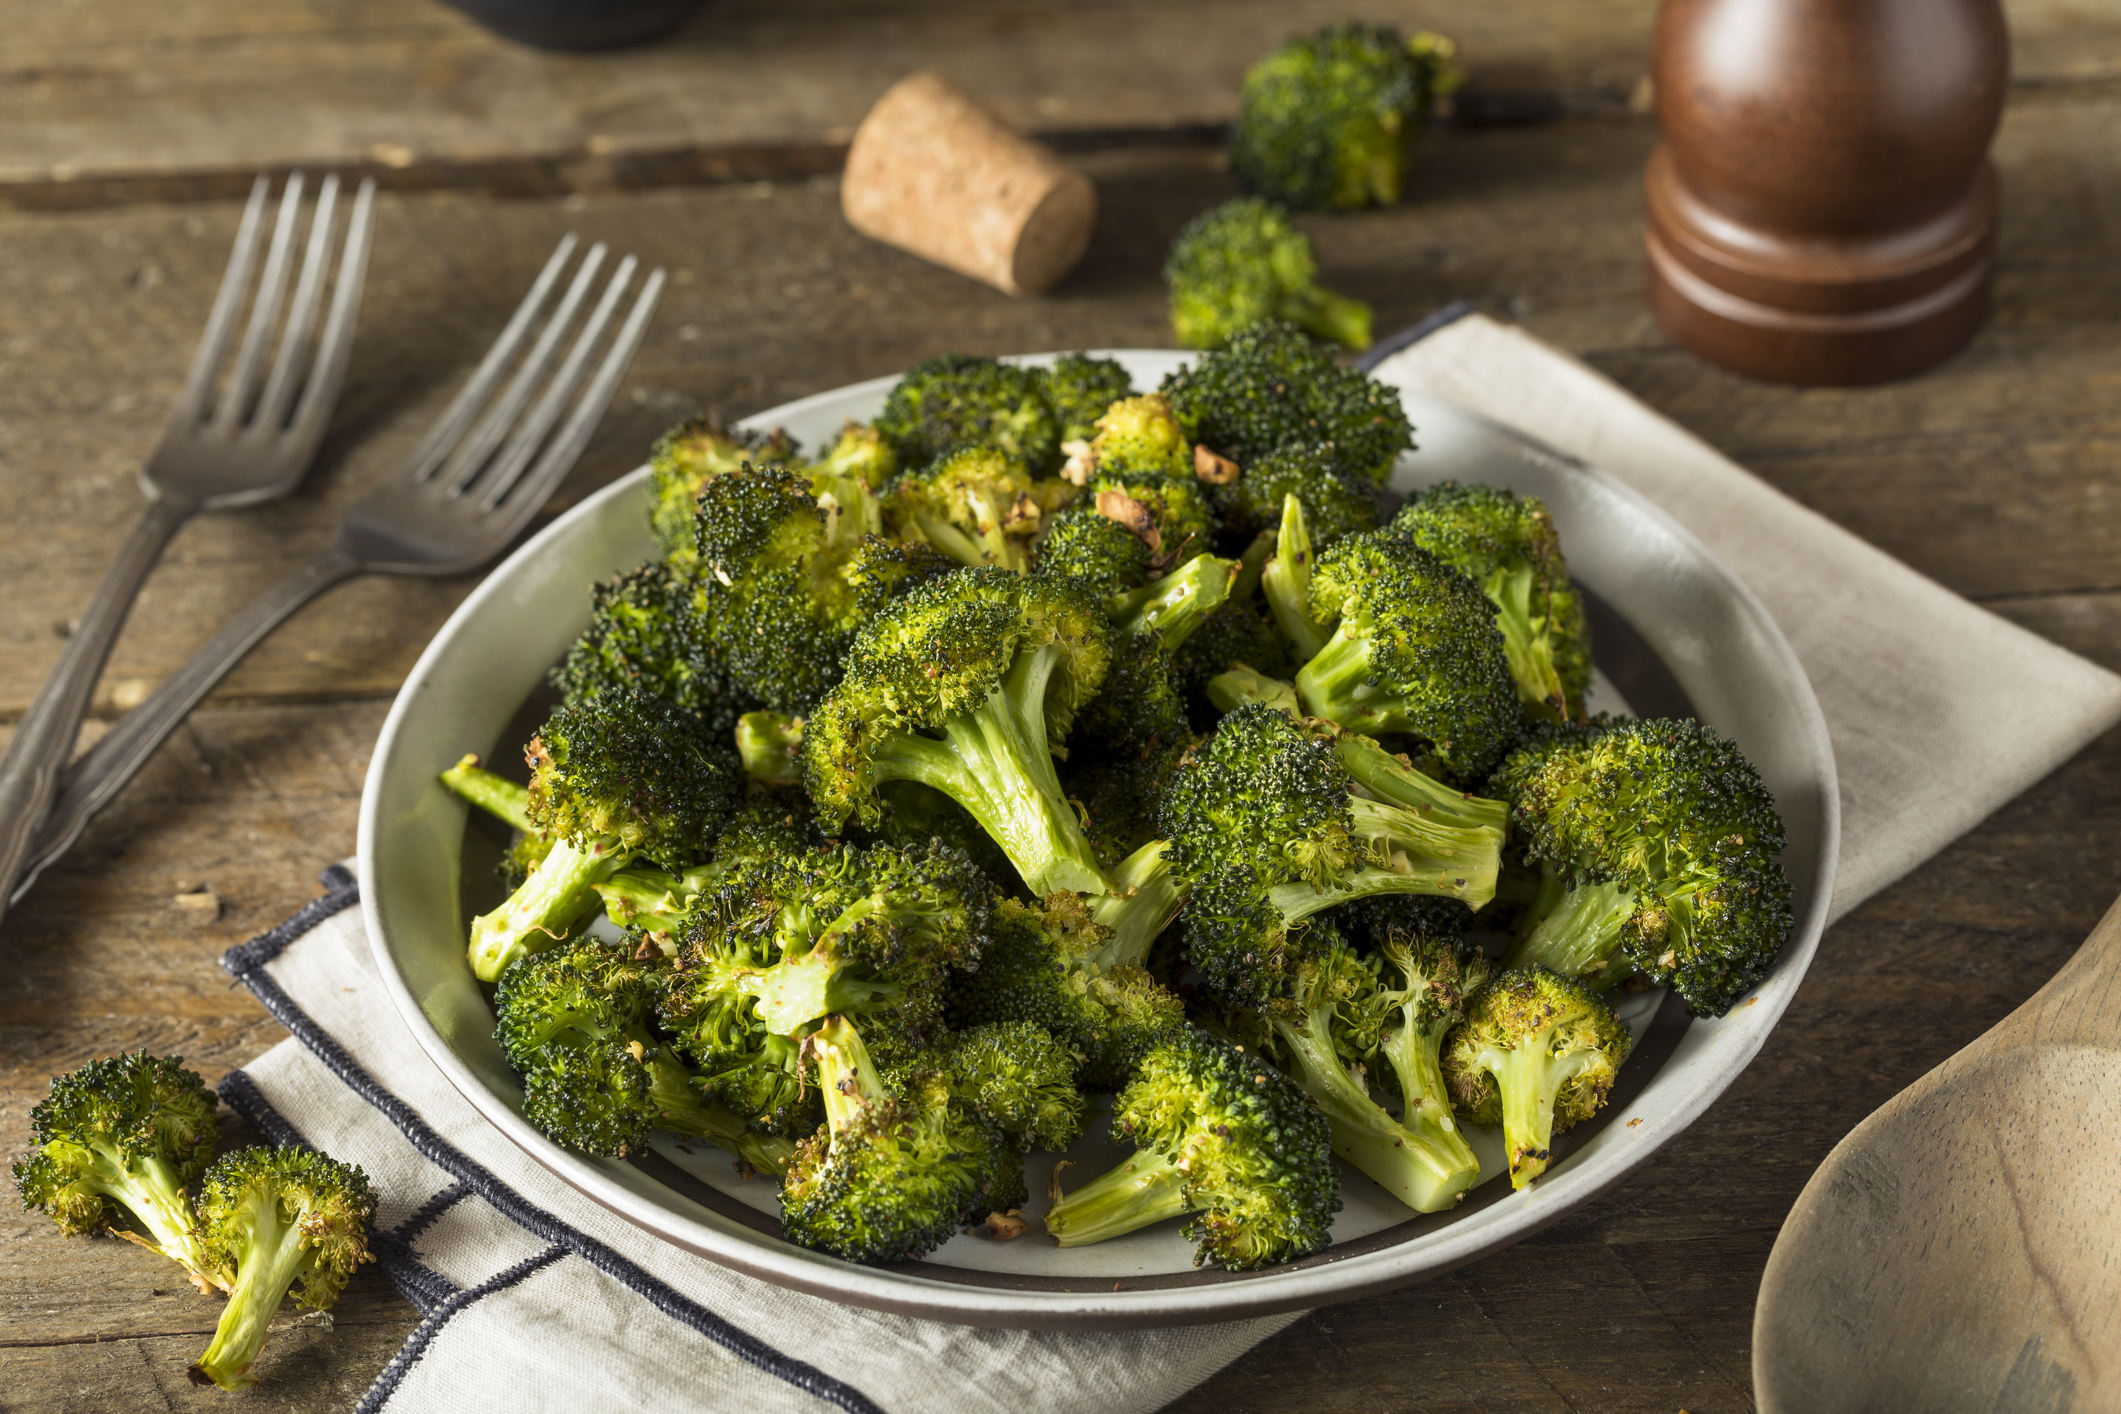 Broccoli florets in a bowl